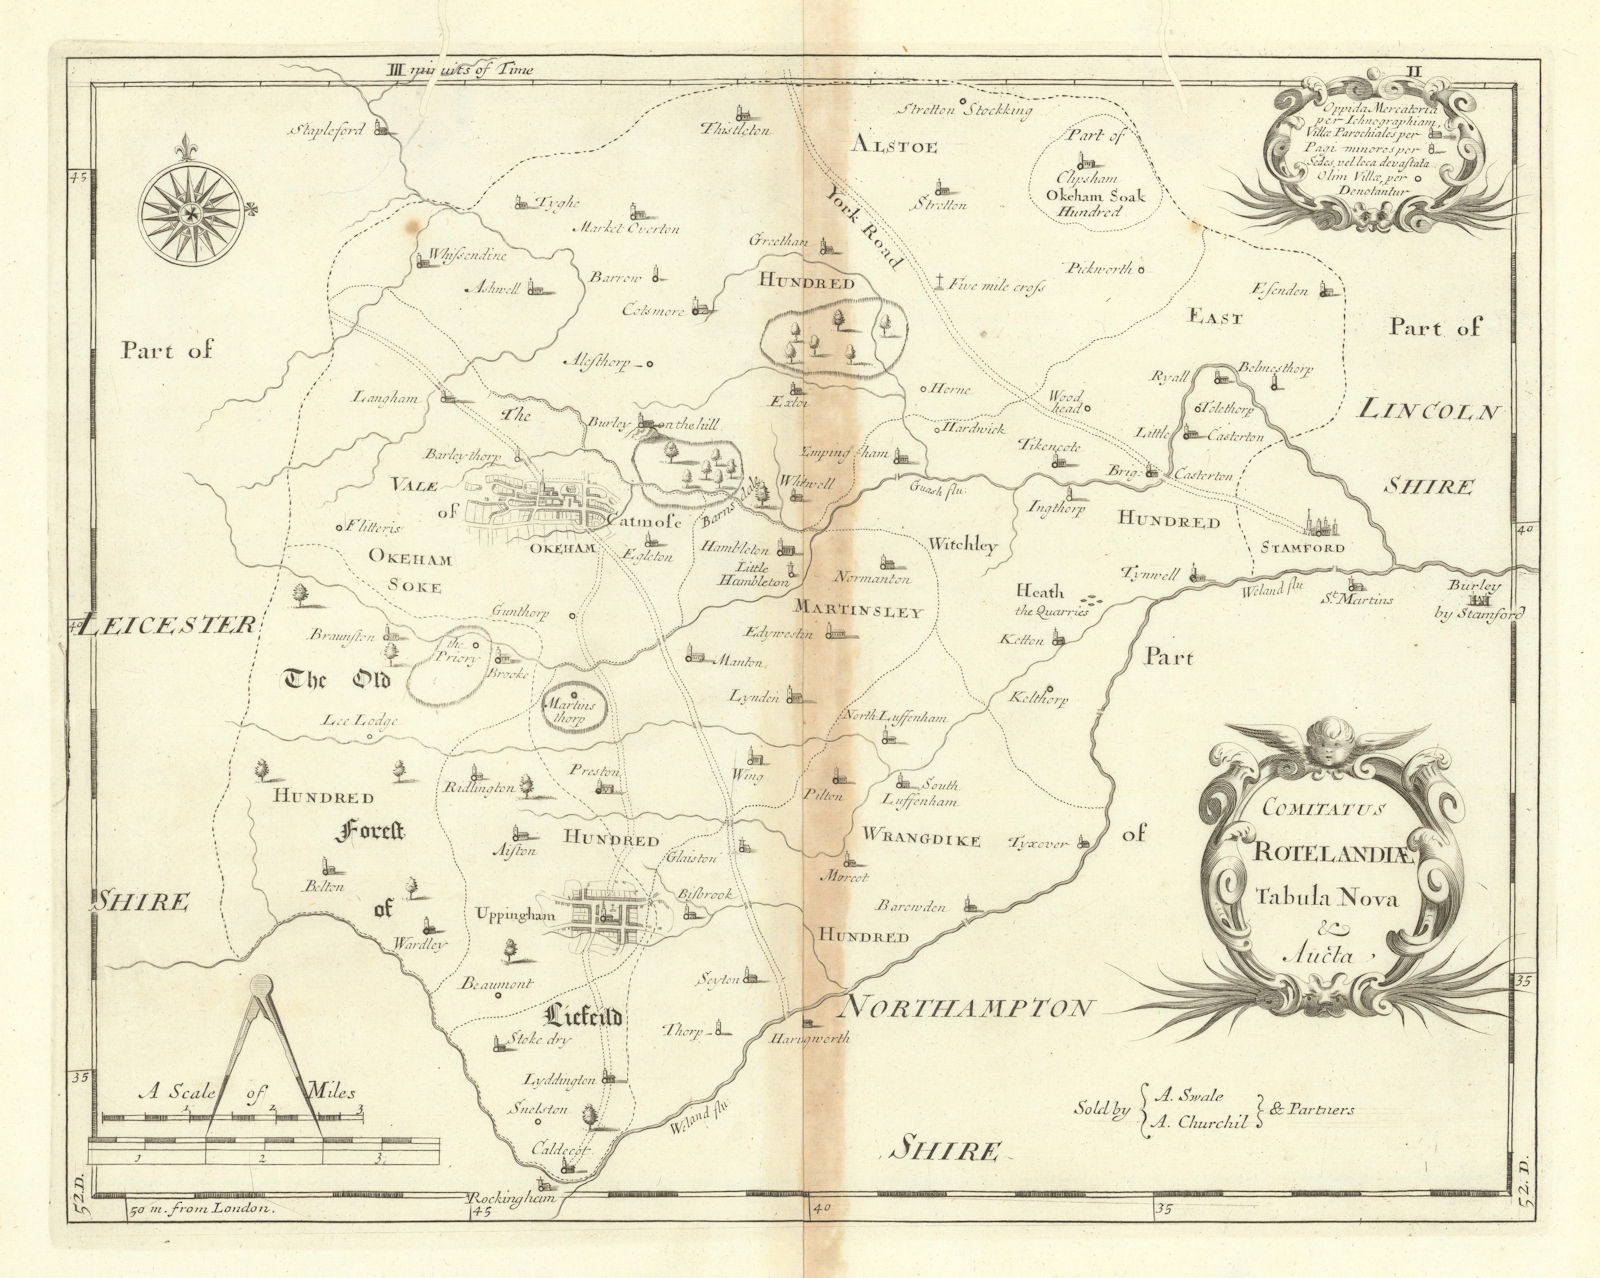 Rutland. 'COMITATUS ROTELANDIAE' by ROBERT MORDEN. Uppingham & Oakham 1695 map